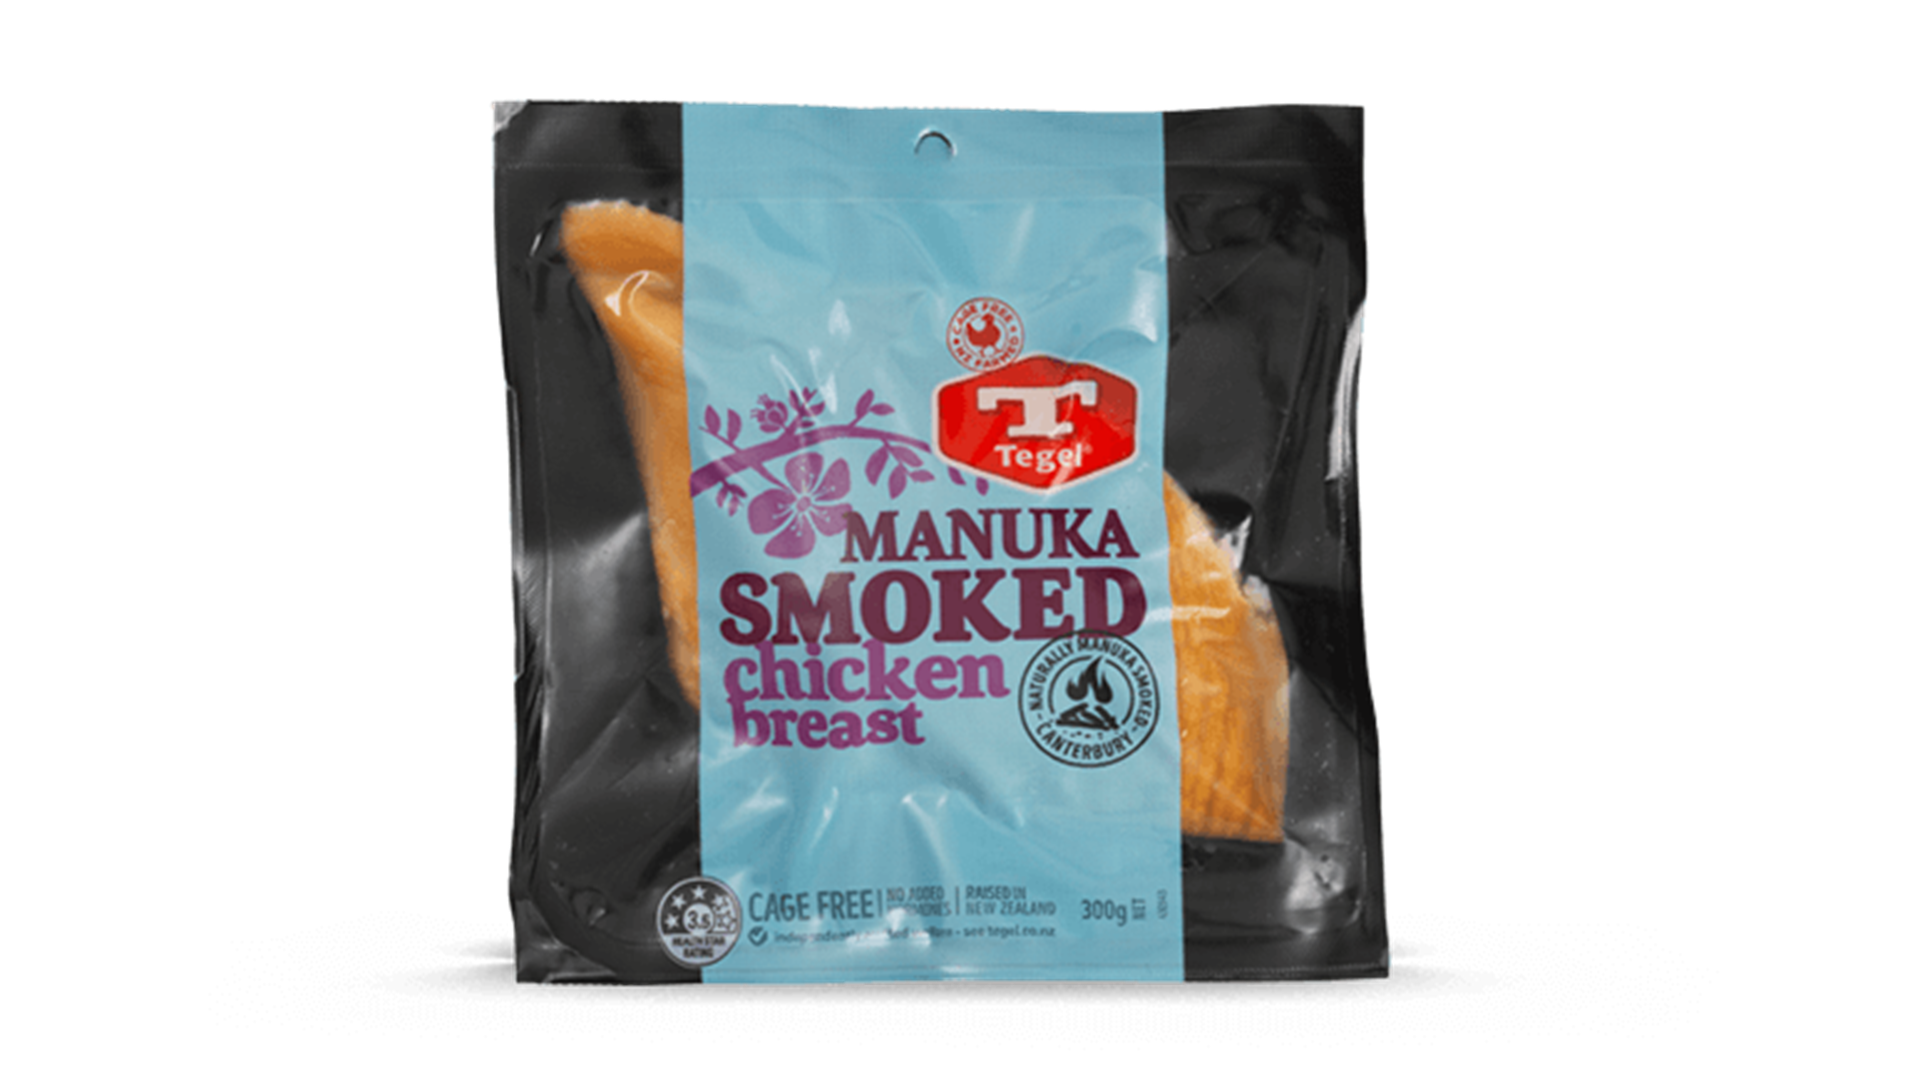 Tegel Manuka Smoked Chicken Breast Original 300g